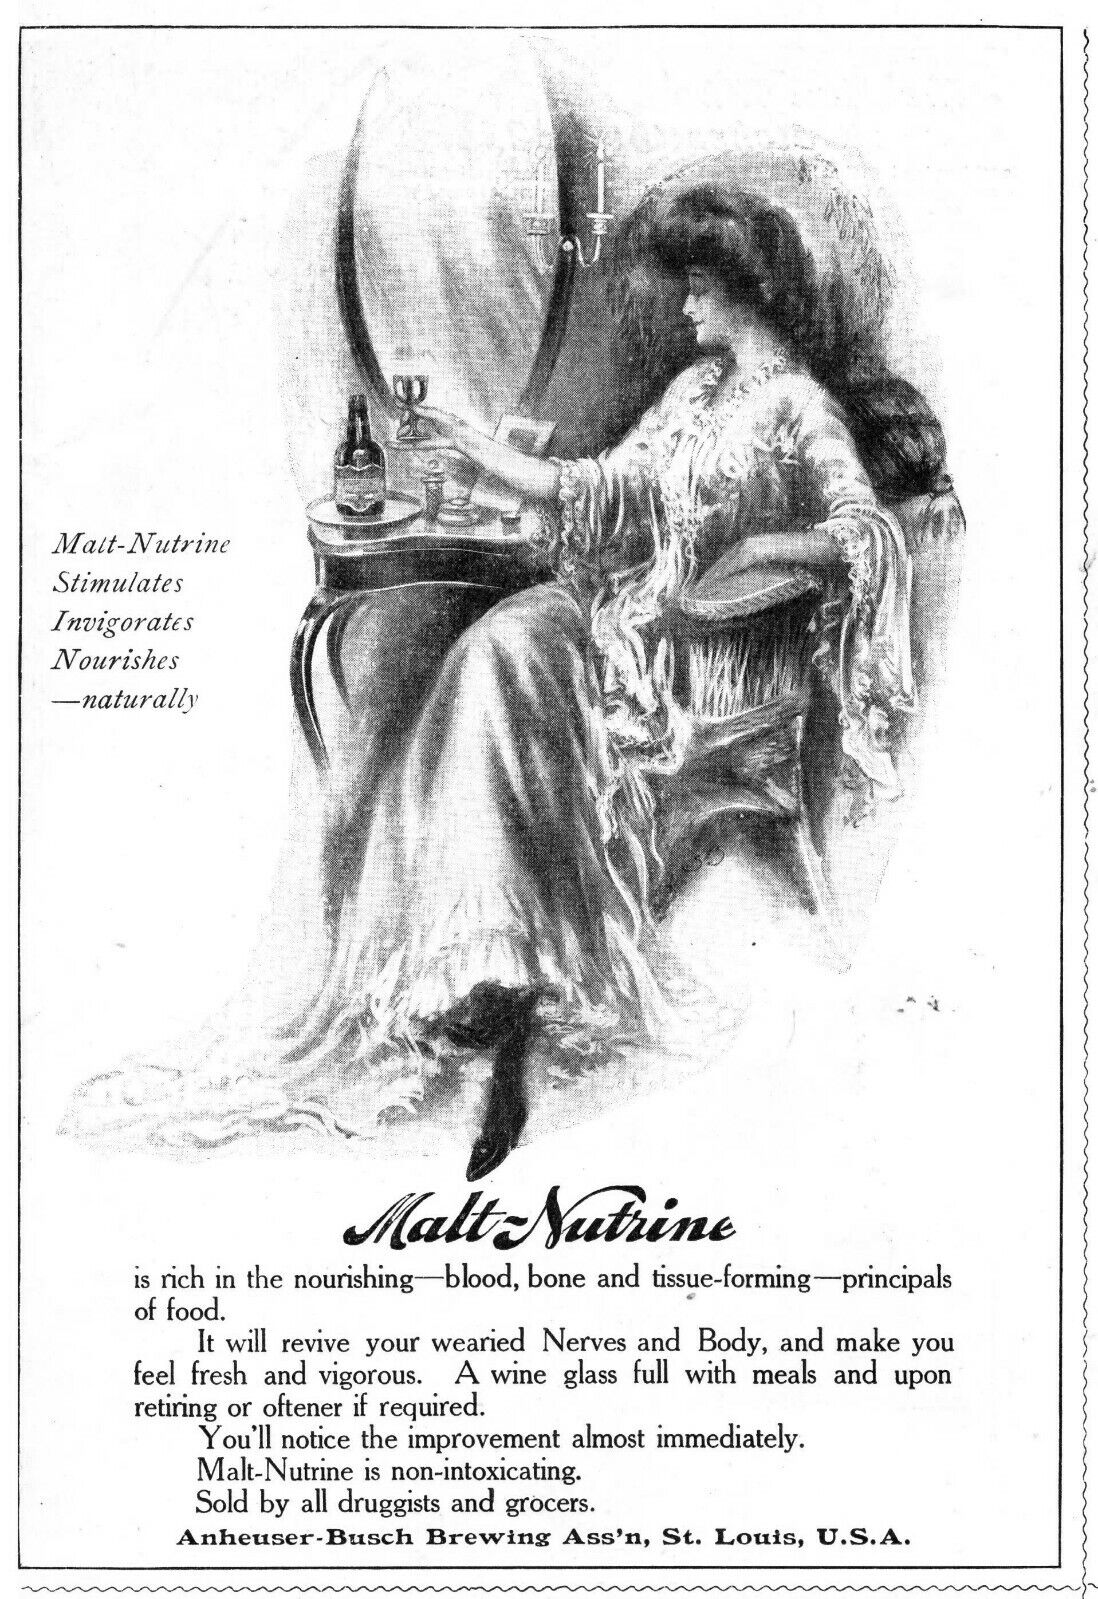 1905 Anheuser Busch Malt Nutrine Antique Print Ad Non Intoxicating Nourishing 